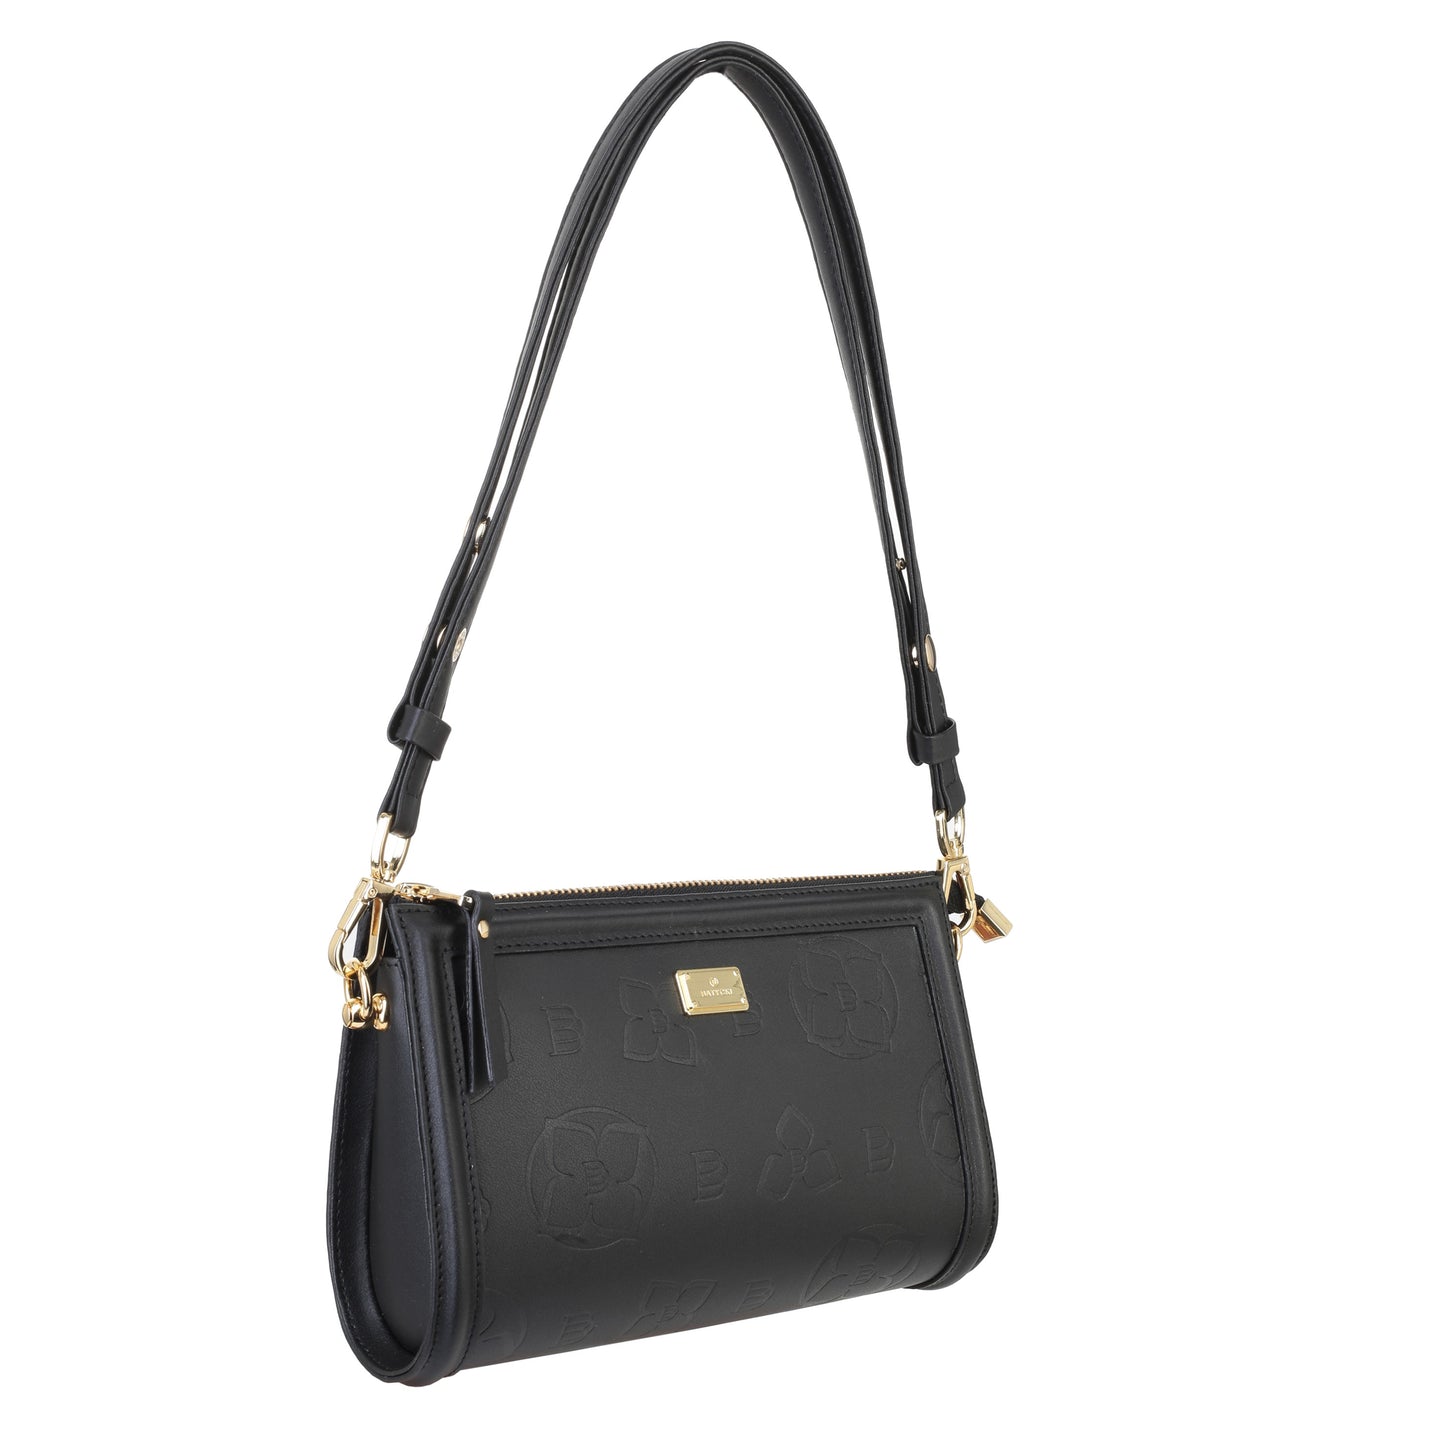 FLAMMY STAMP NAPA BLACK women's leather handbag